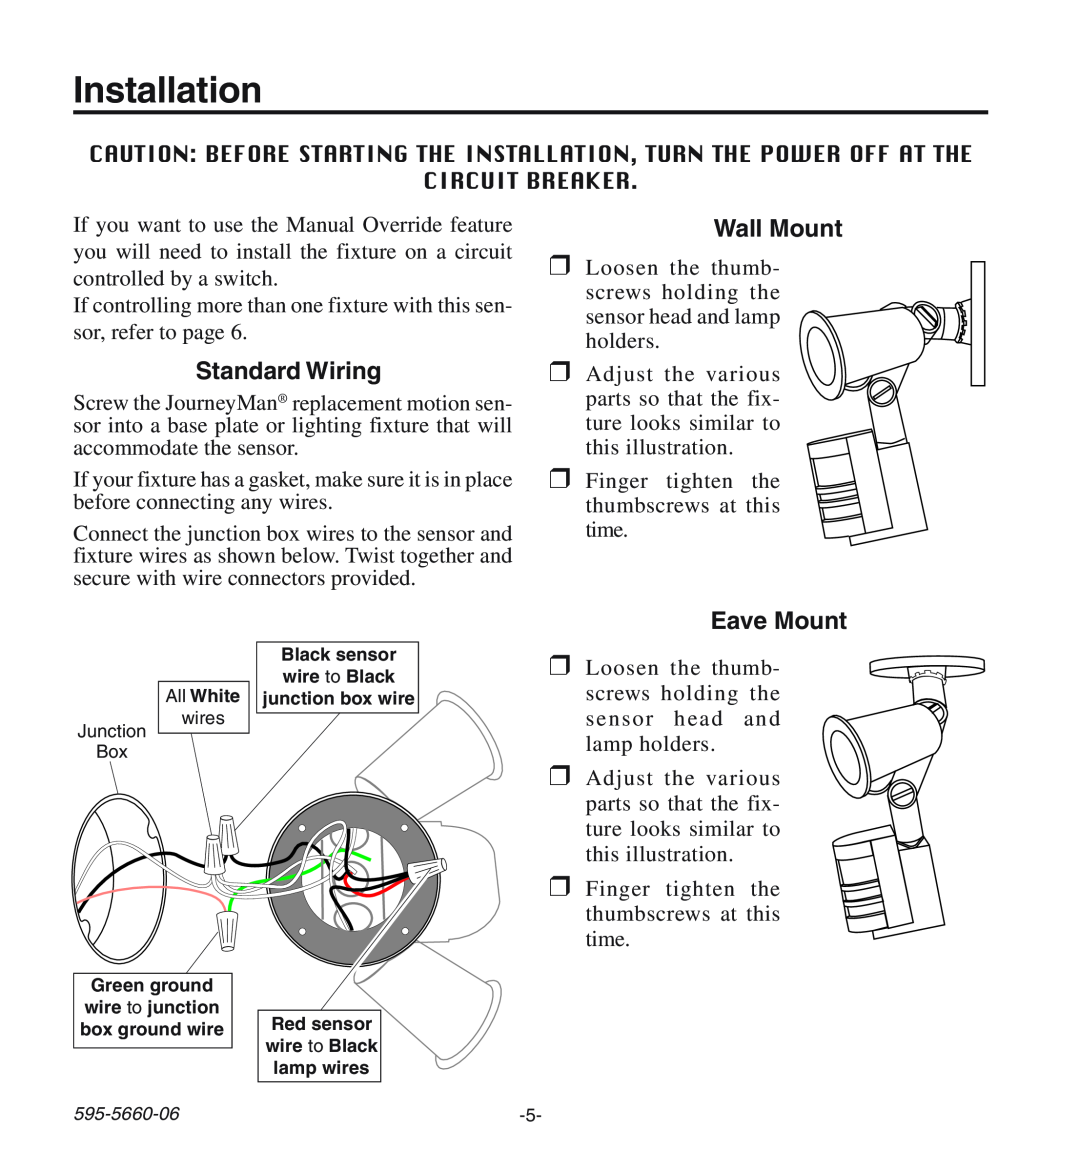 Desa HD-9140 manual Installation, Standard Wiring, Wall Mount, Eave Mount 